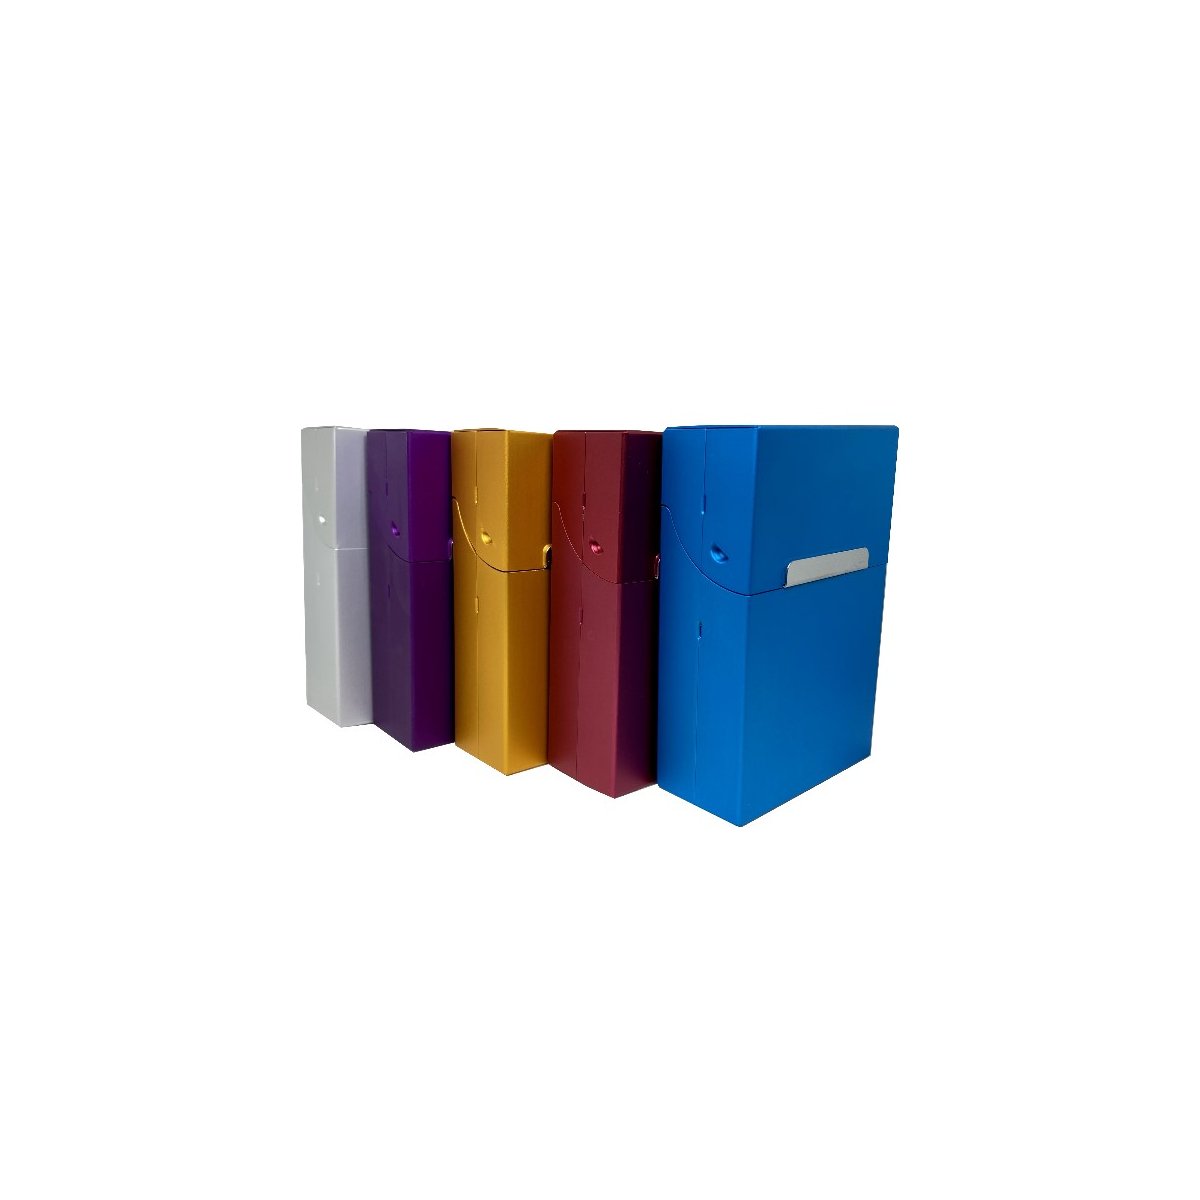 Diawell Zigarettenetui Edel Zigarettenbox Aluminium Etui Box Behälter mit Magnetverschluss für 20 Zigaretten Zigarettenschachtel Schachtel 